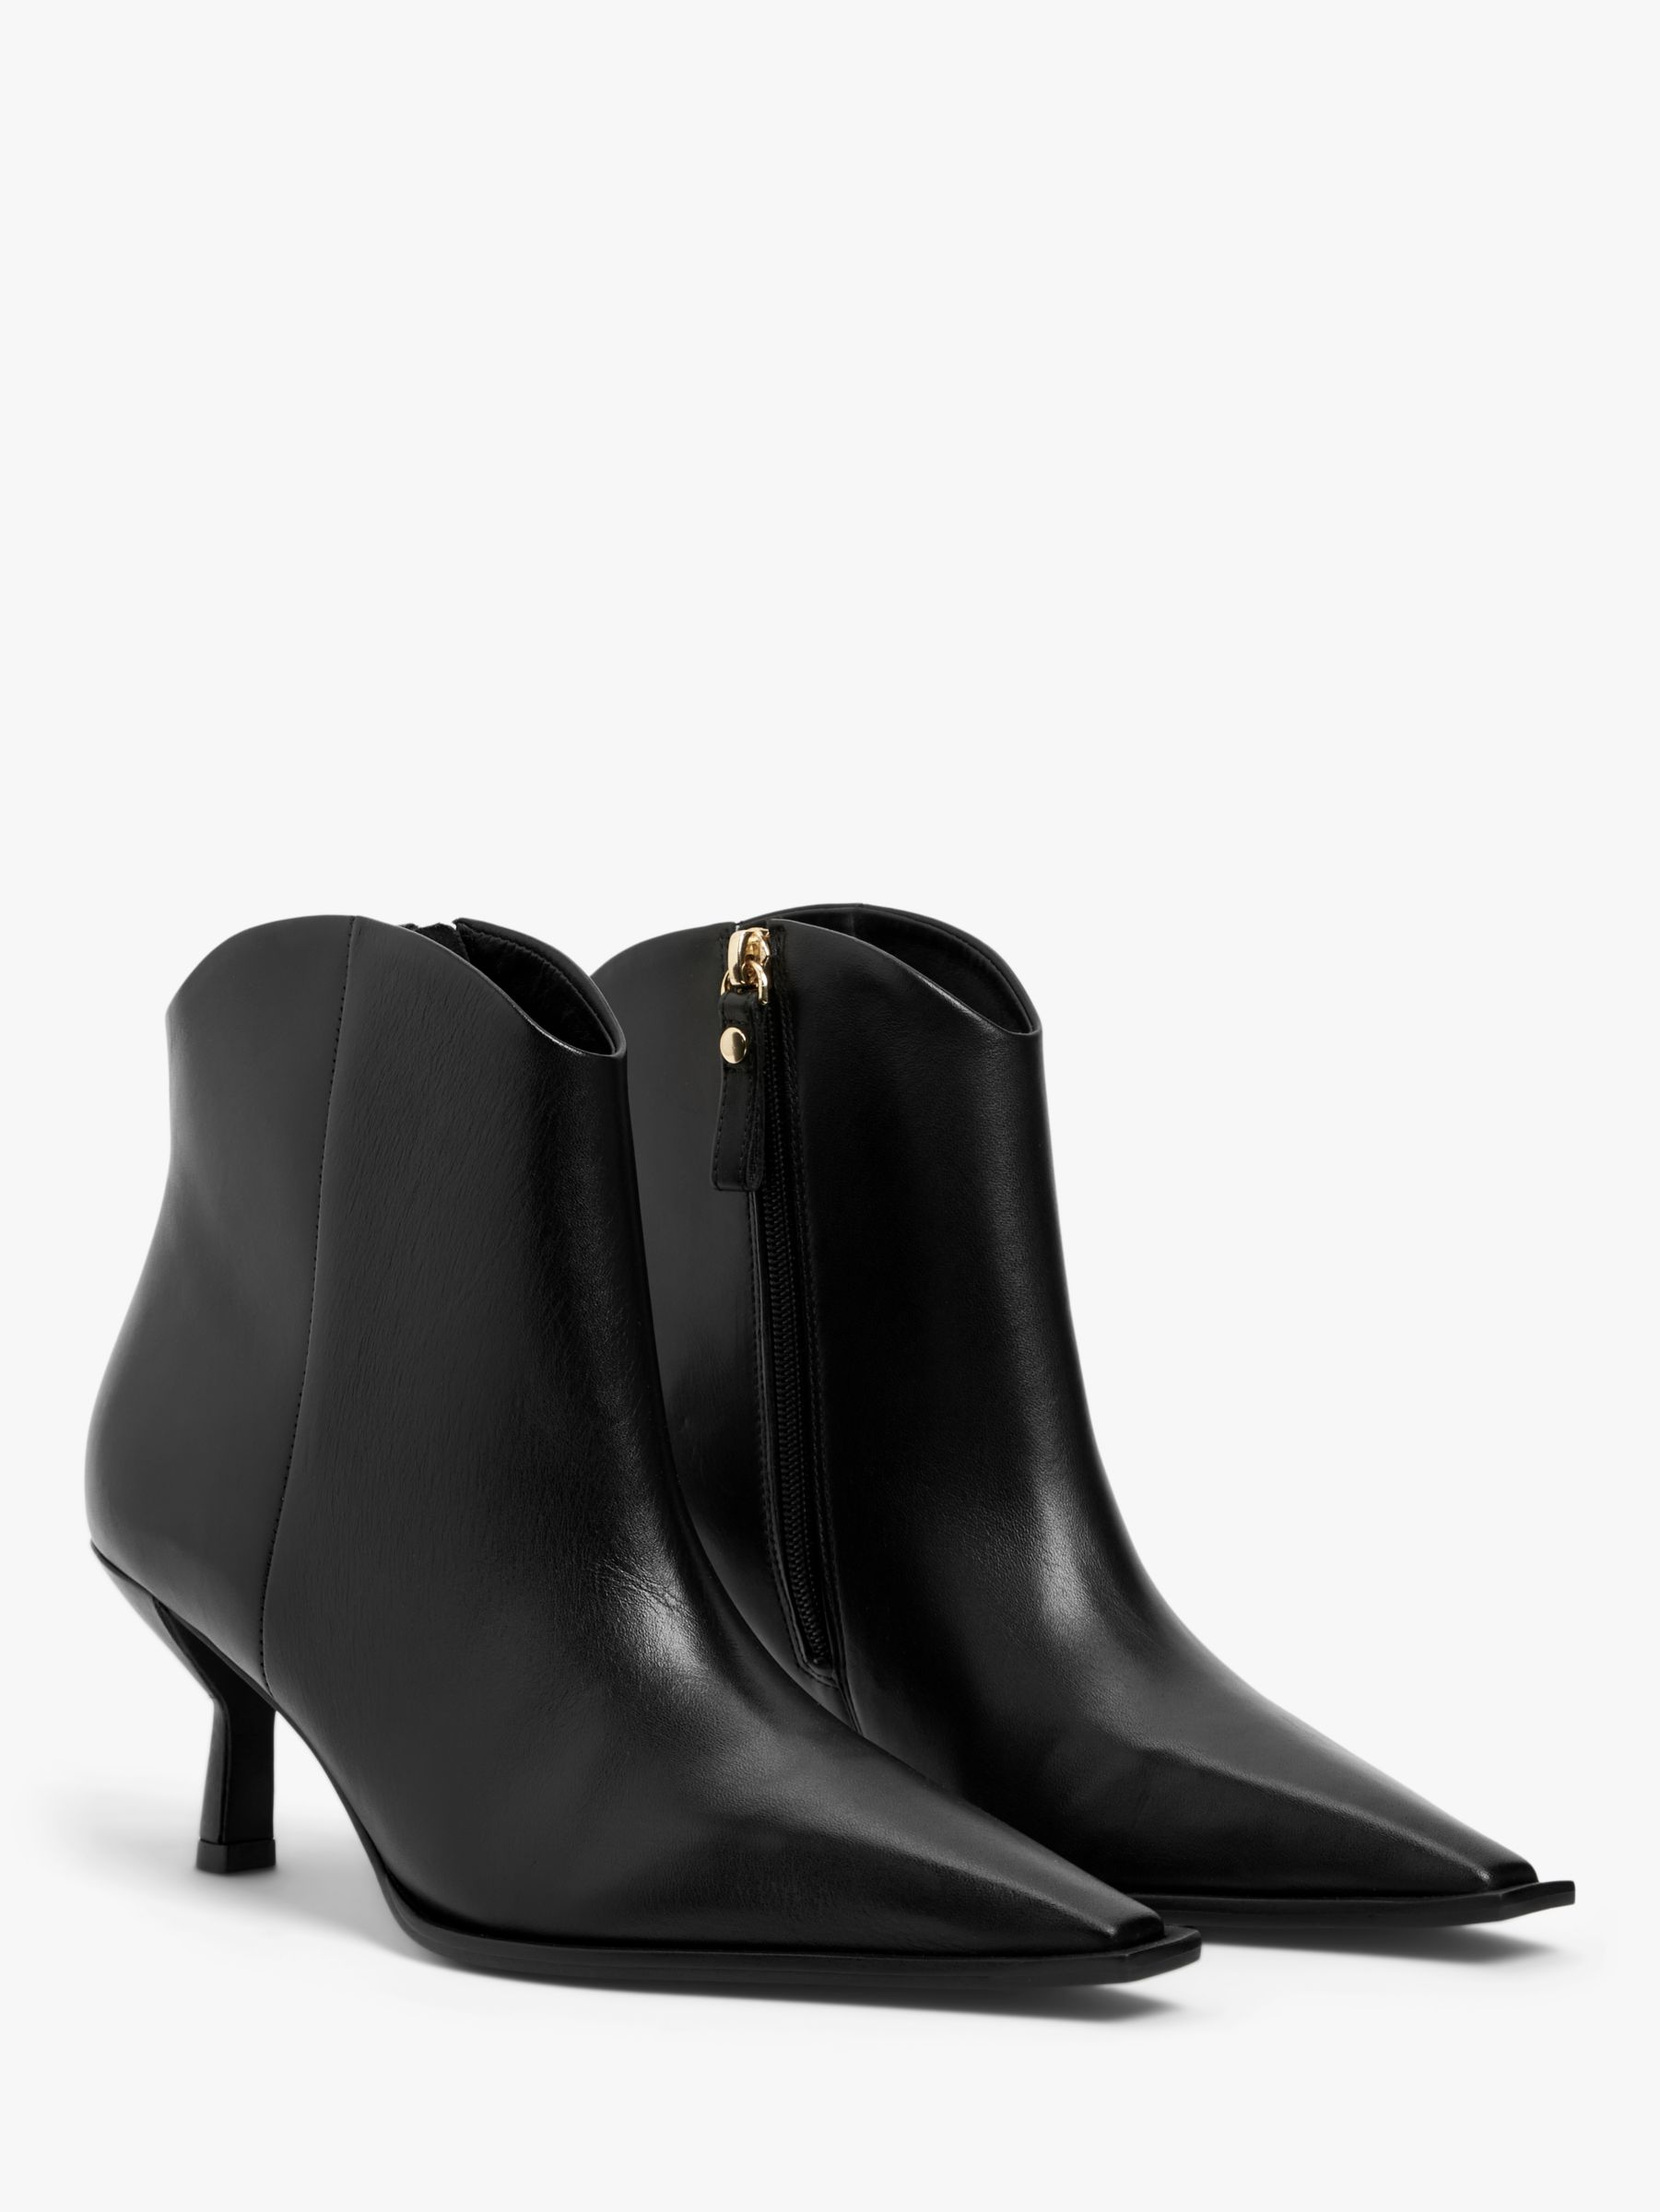 John Lewis Panama Leather Dressy Western Ankle Boots, Black, 6